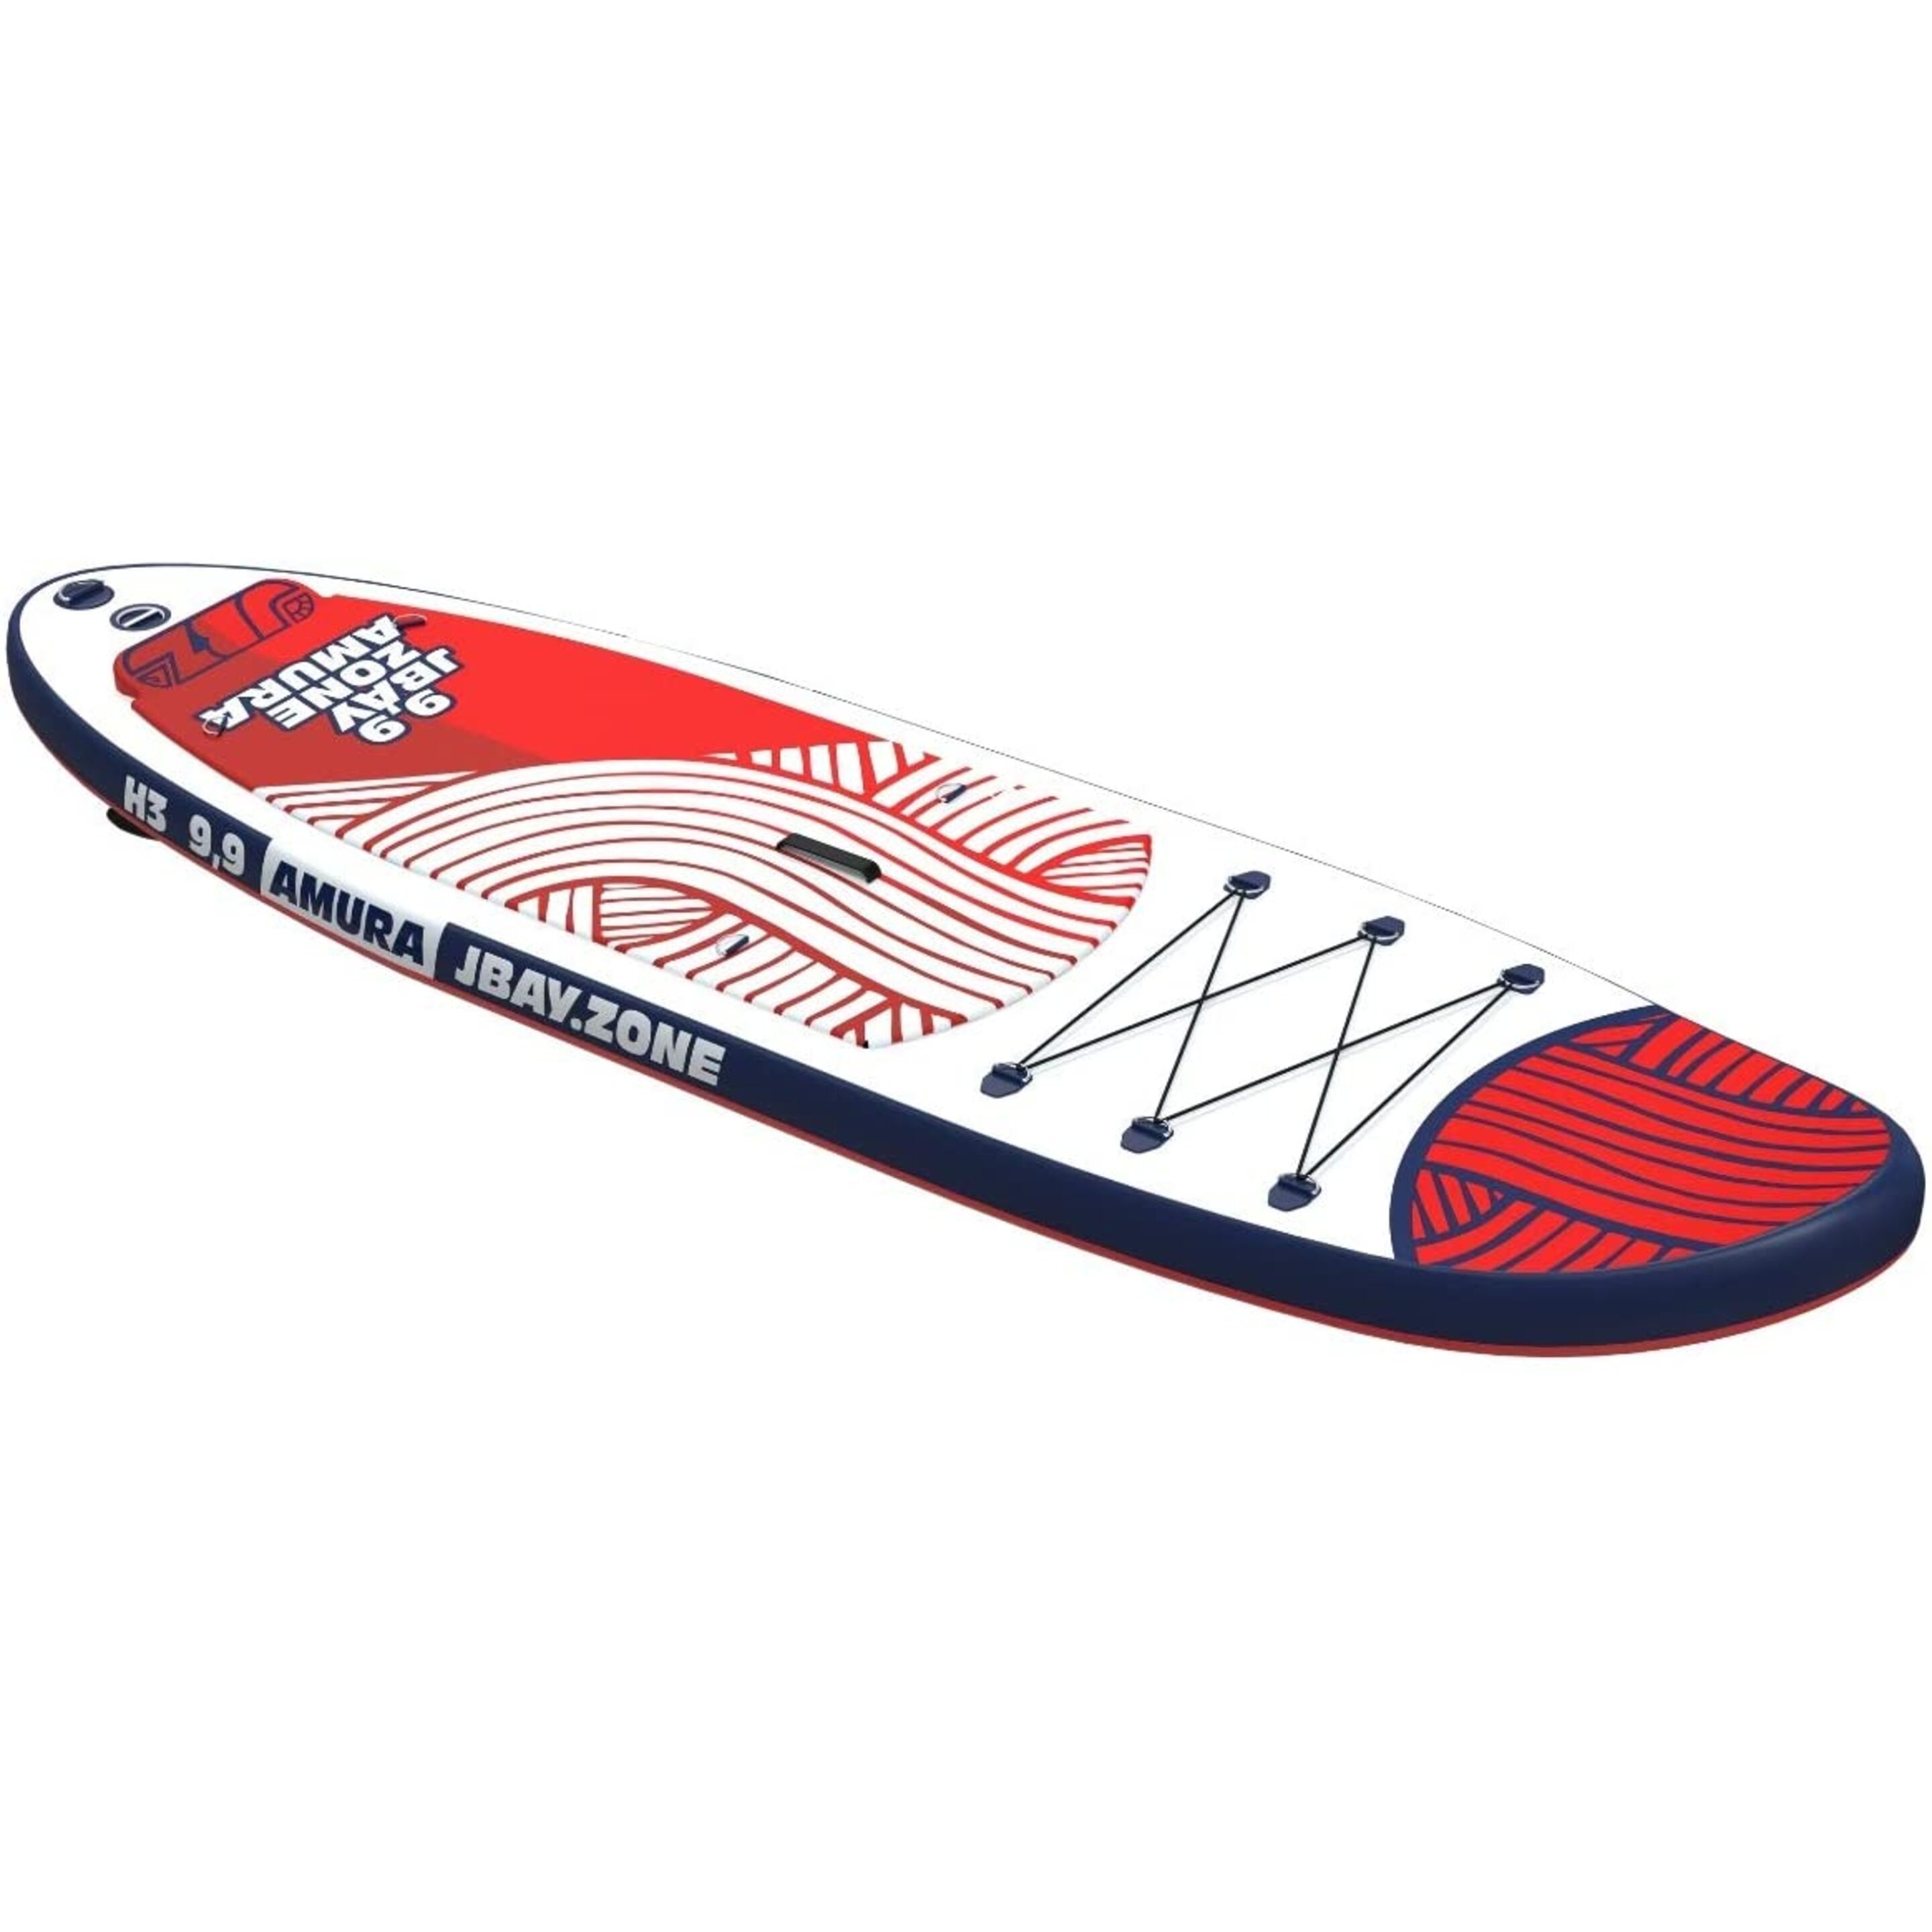 Tabla De Stand Up Paddle Surf Sup Hinchable Modelo Amura H3